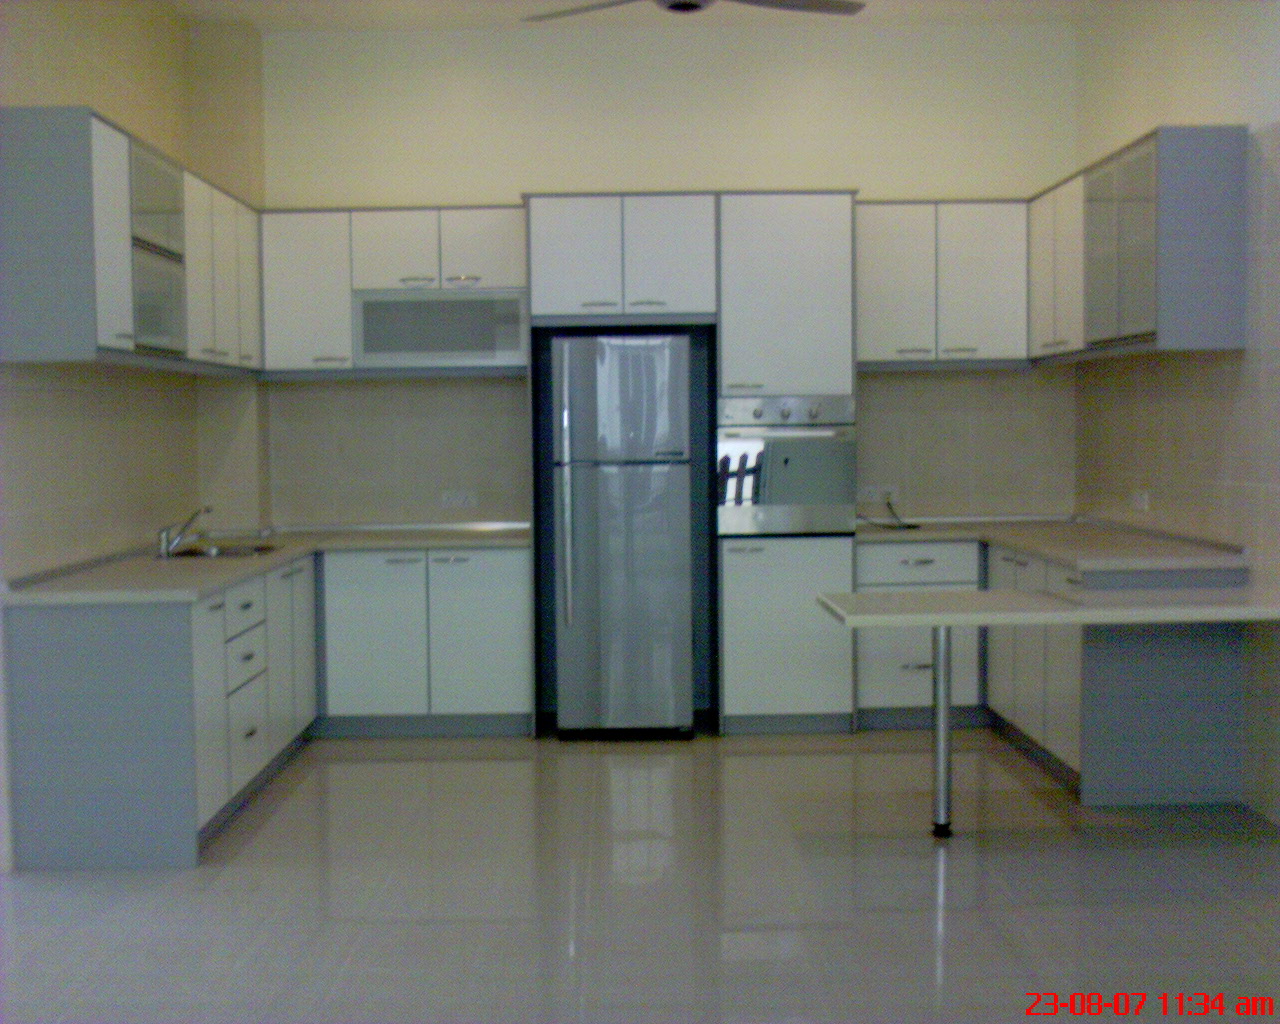 Oren Kabinet: Lagi Design...kitchen kabinet